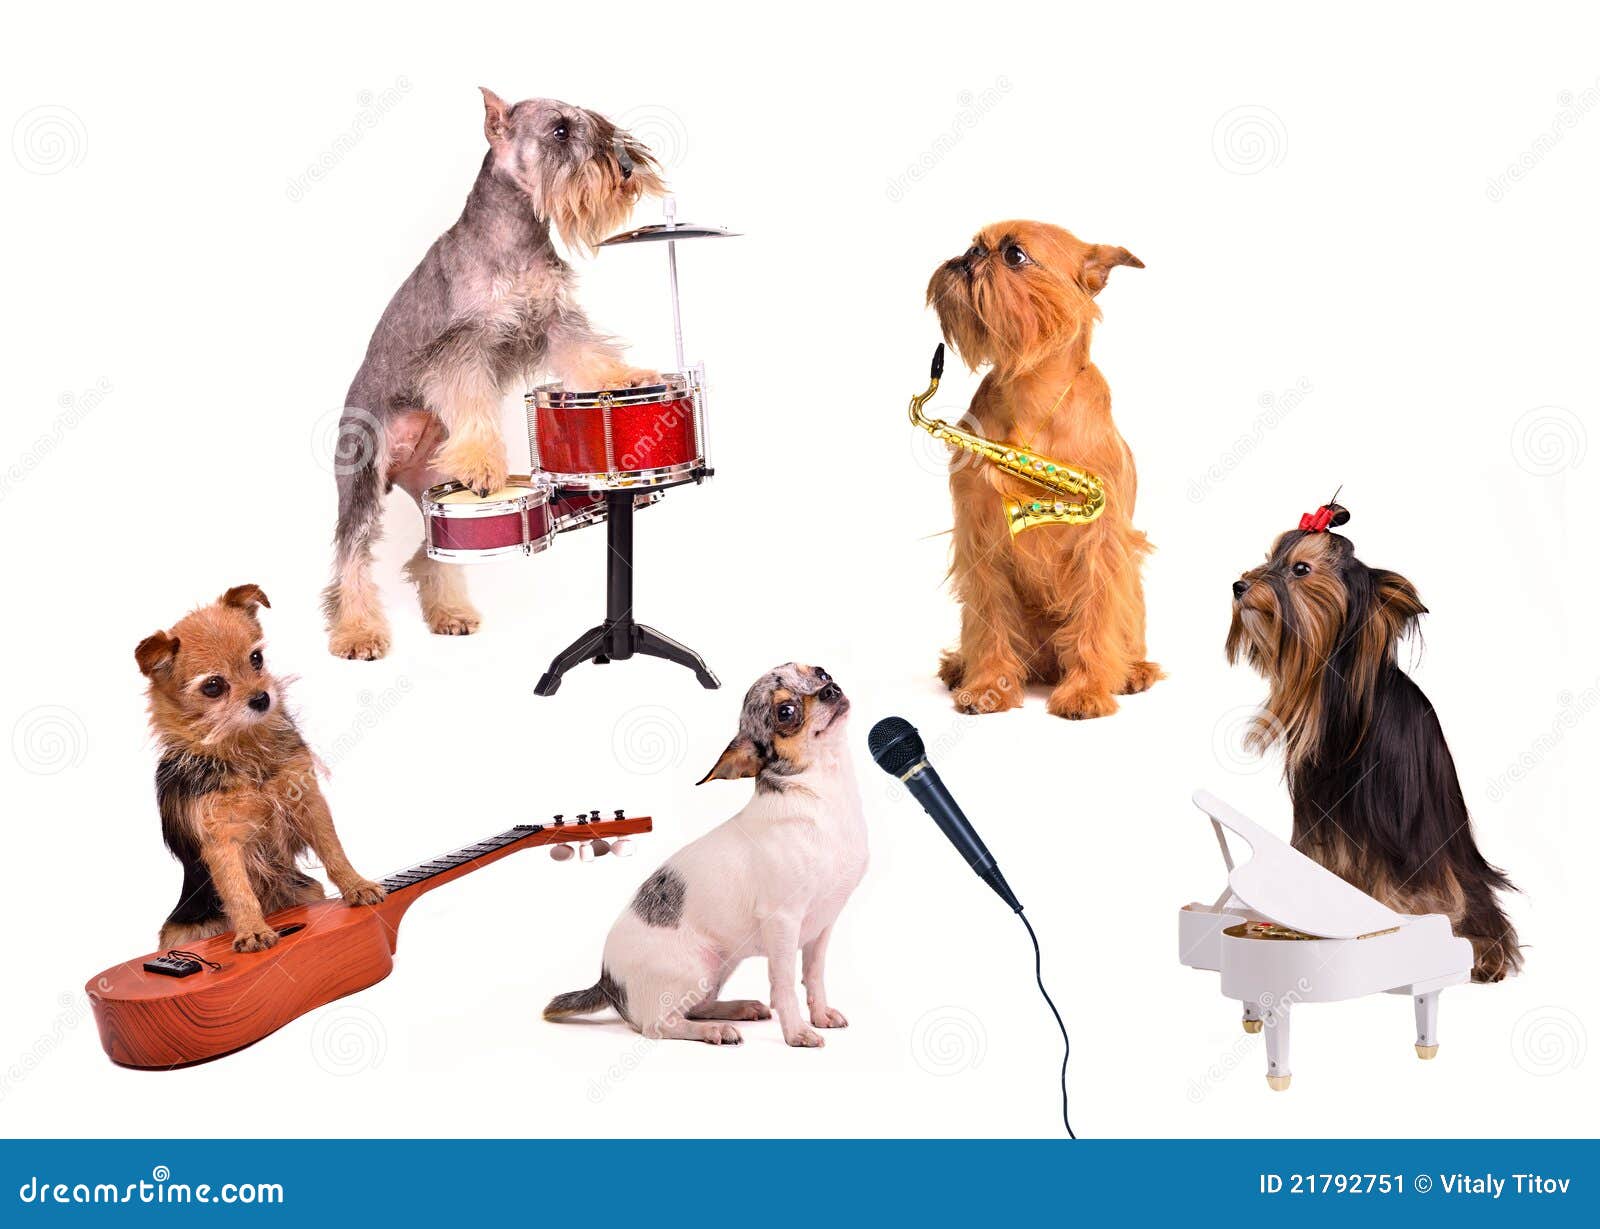 dog's orchestra/ band